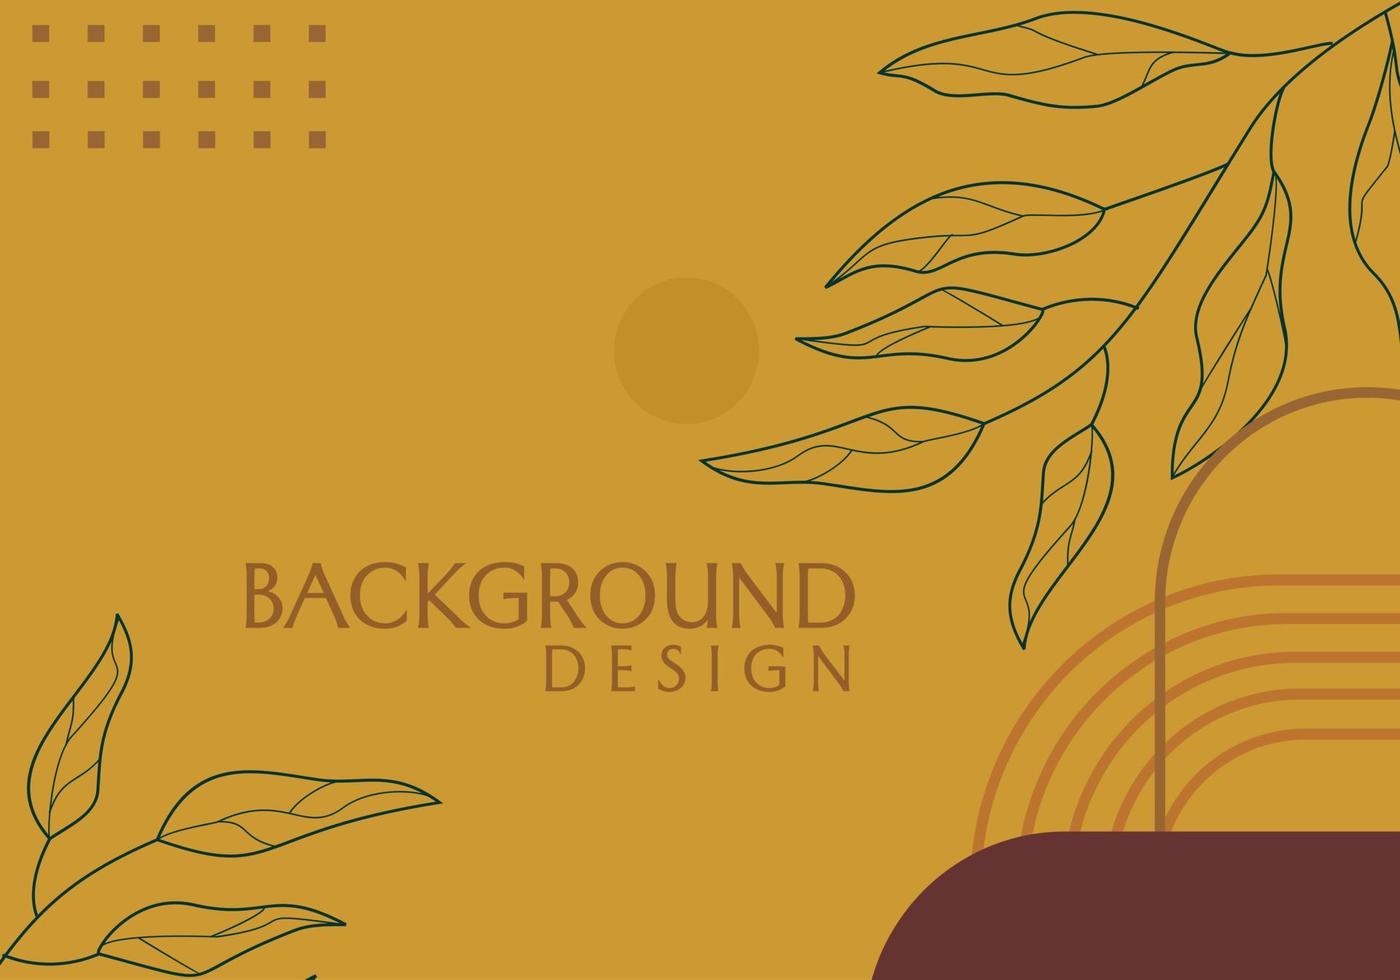 plantilla de portada de banner de tema natural. fondo marrón con elementos de hoja dibujados a mano vector